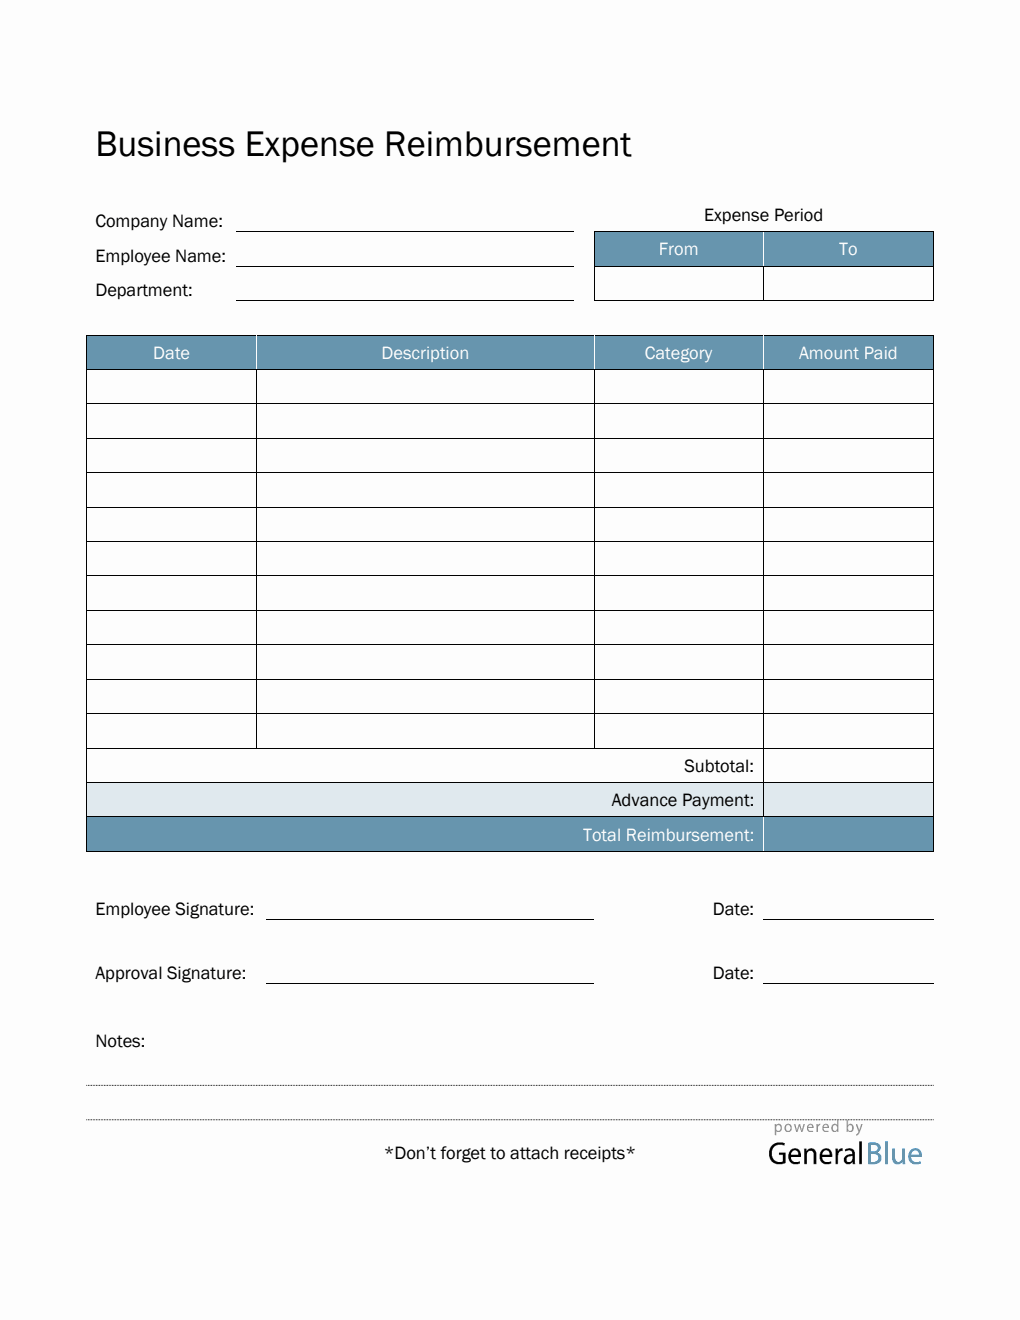 Business Expense Reimbursement in PDF (Aqua)